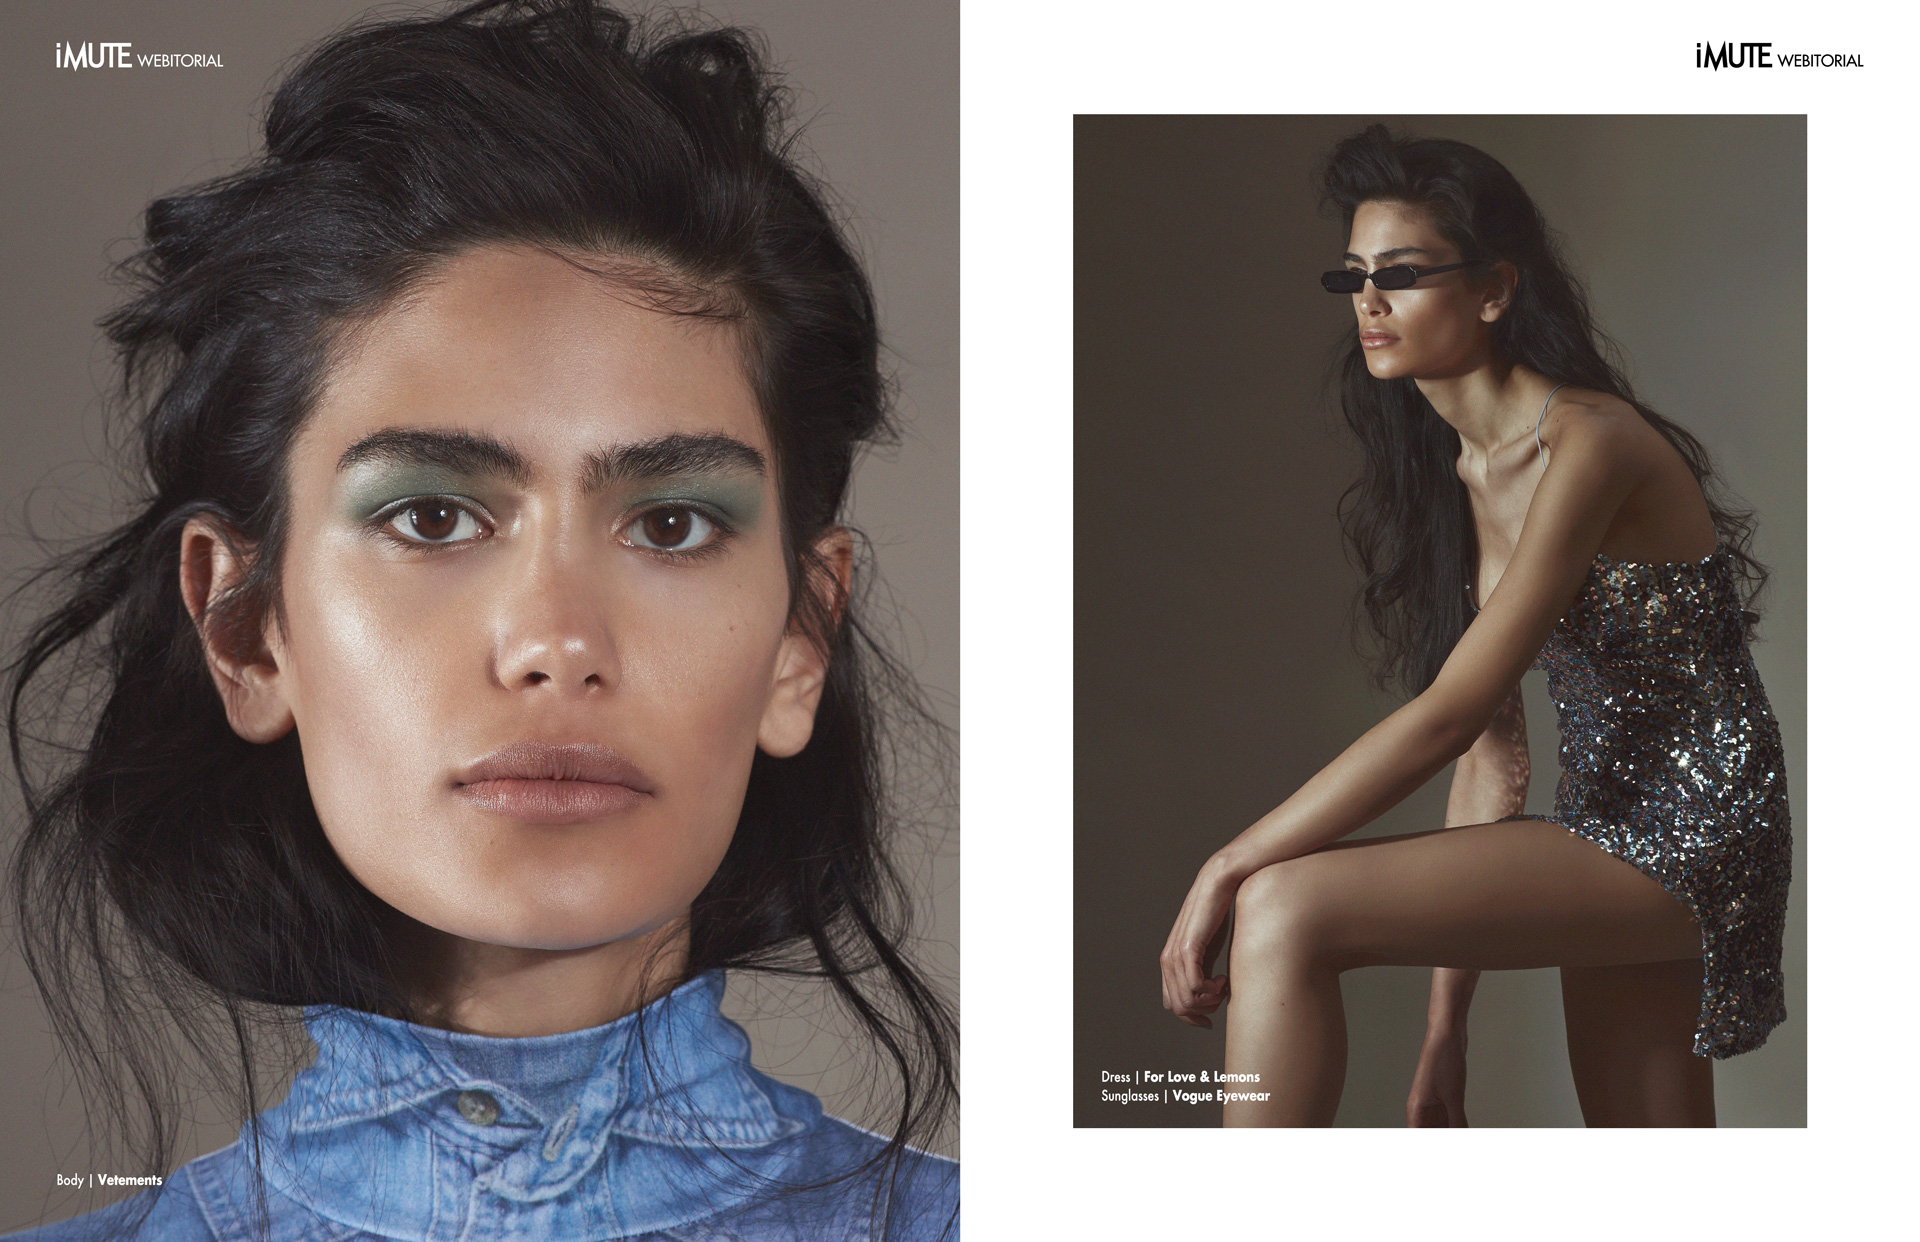 Aria webitorial for iMute Magazine PHOTOGRAPHER | DIANA DIEDERICH MODEL | ARIA LILITH @ Modelwerk Models STYLIST | TOMISLAV BLAIC MAKEUP & HAIR | YOUNESBENT @ Kult Artists